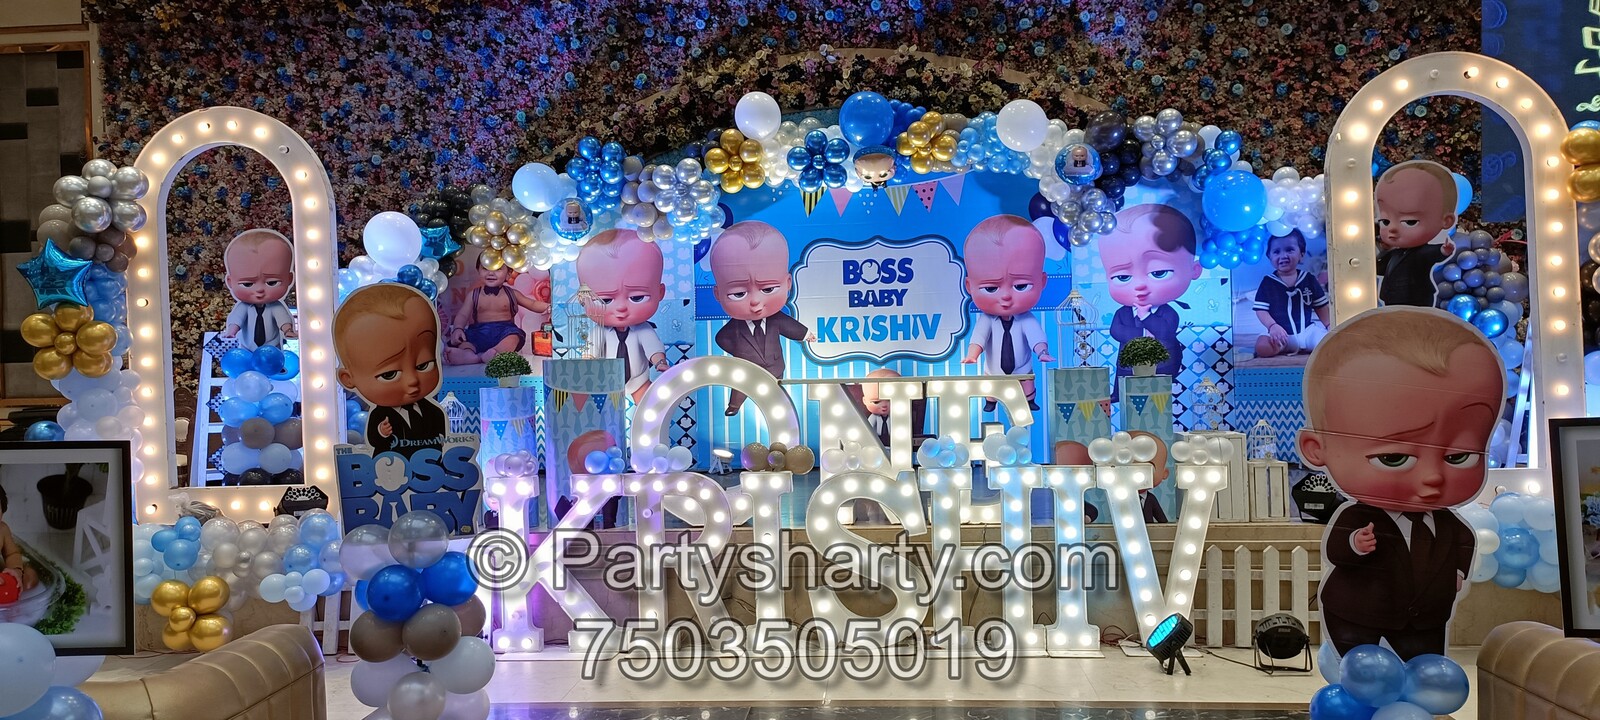 Party Sharty - birthday party organisers in delhi, birthday party boys, girls themes